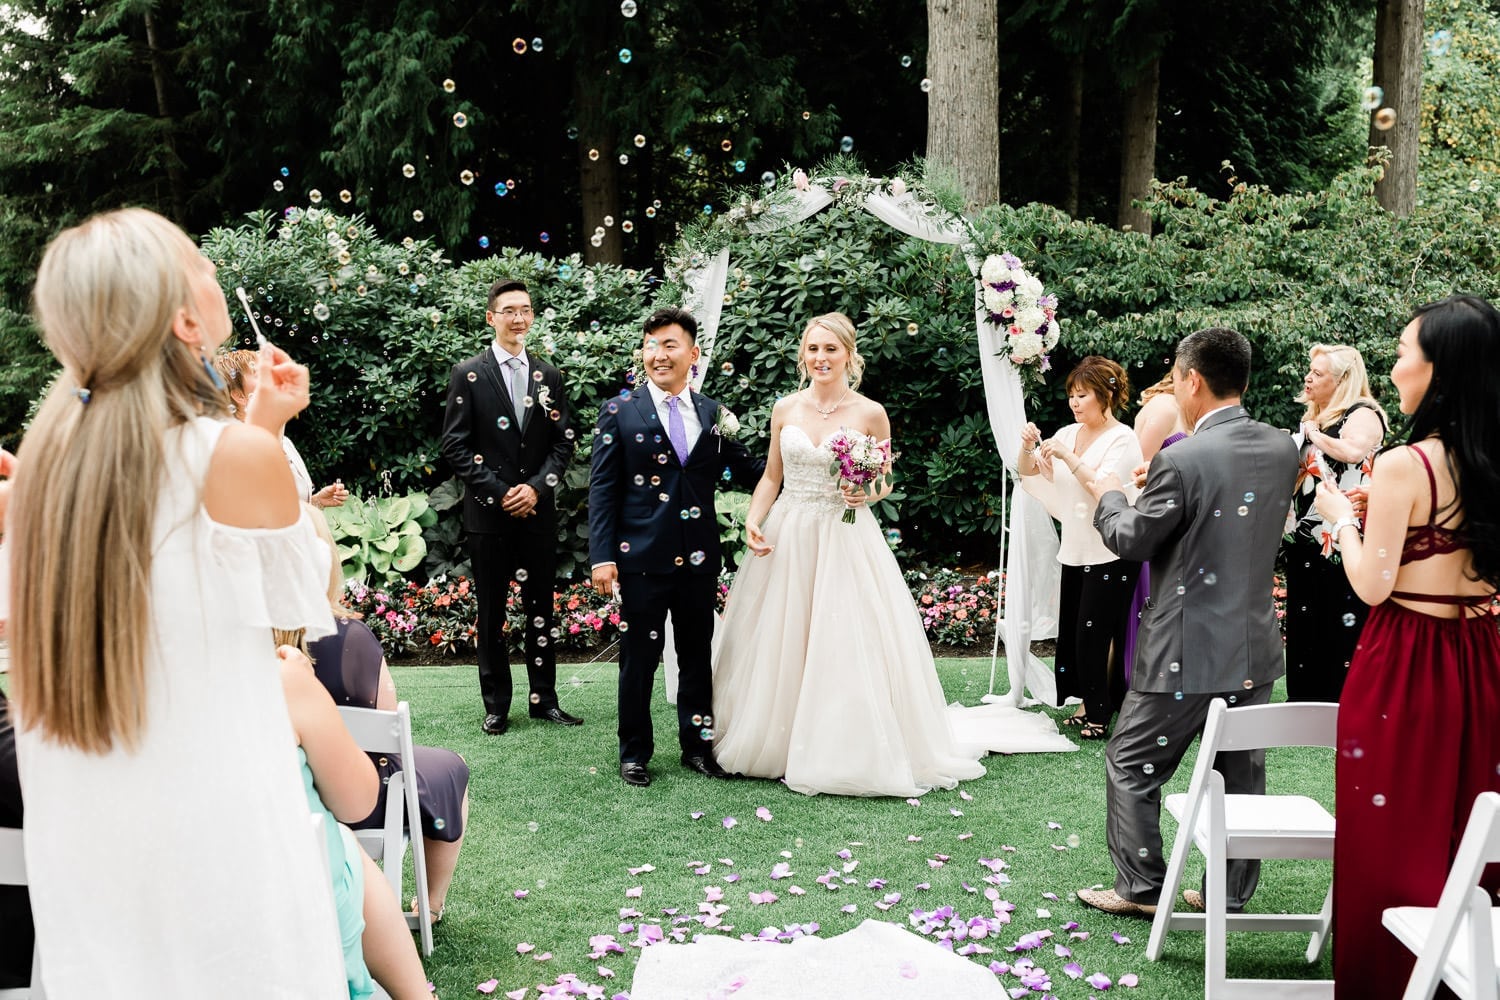 Wedding ceremony with bubbles | Vancouver wedding photographer | Westwood Plateau Golf Club Wedding